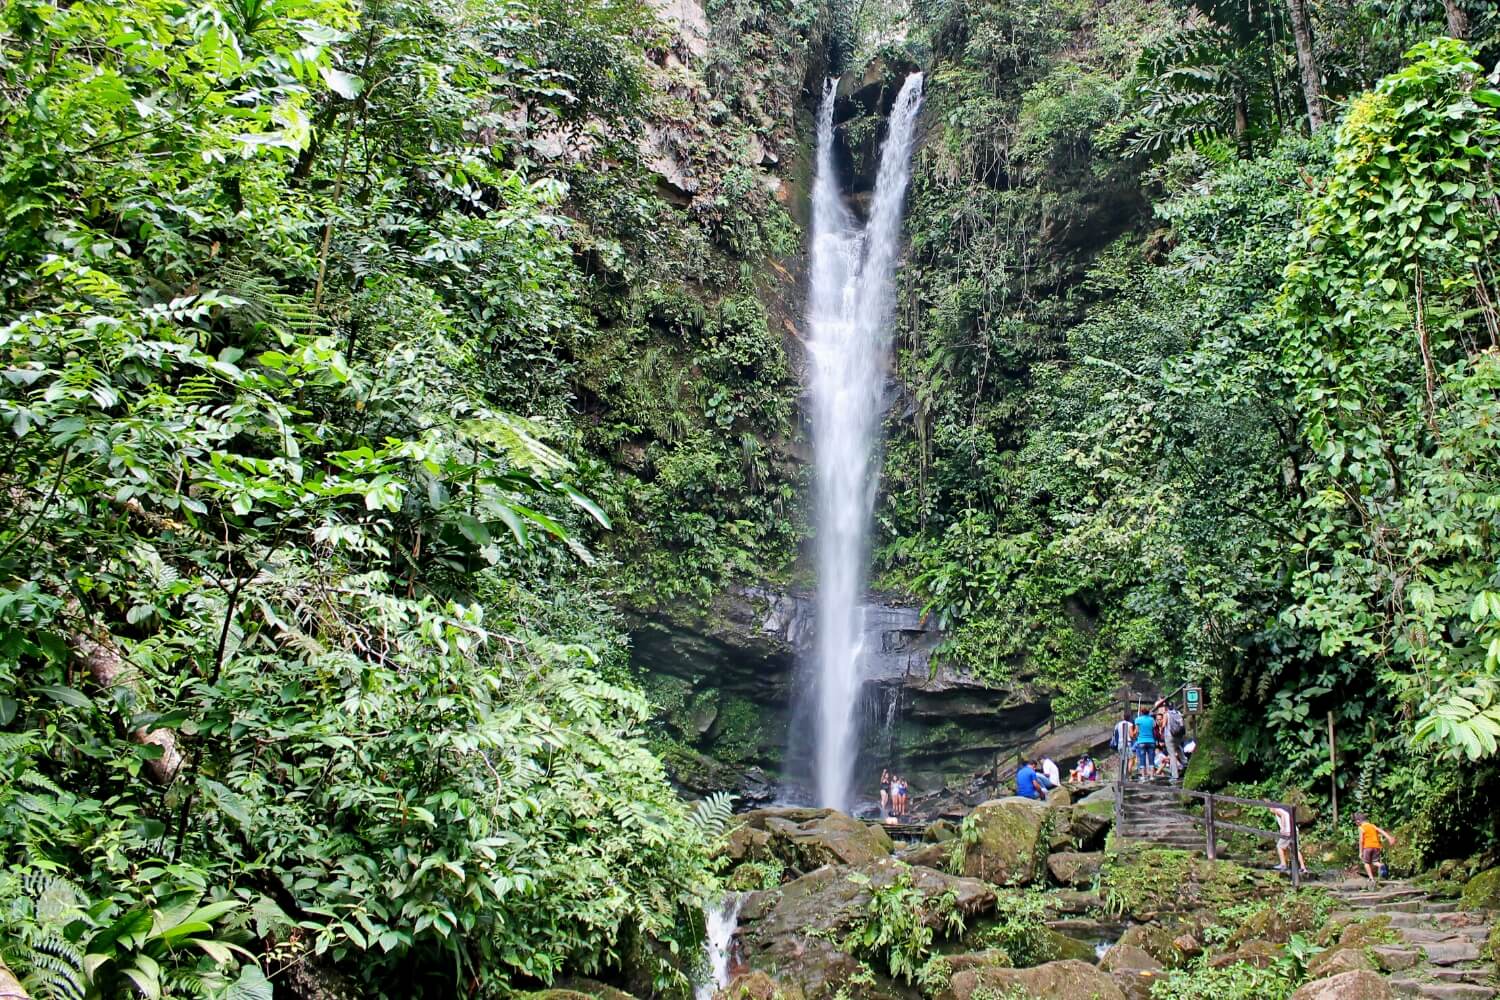 Ahuashiyacu Waterfall: One of the most beautiful destinations